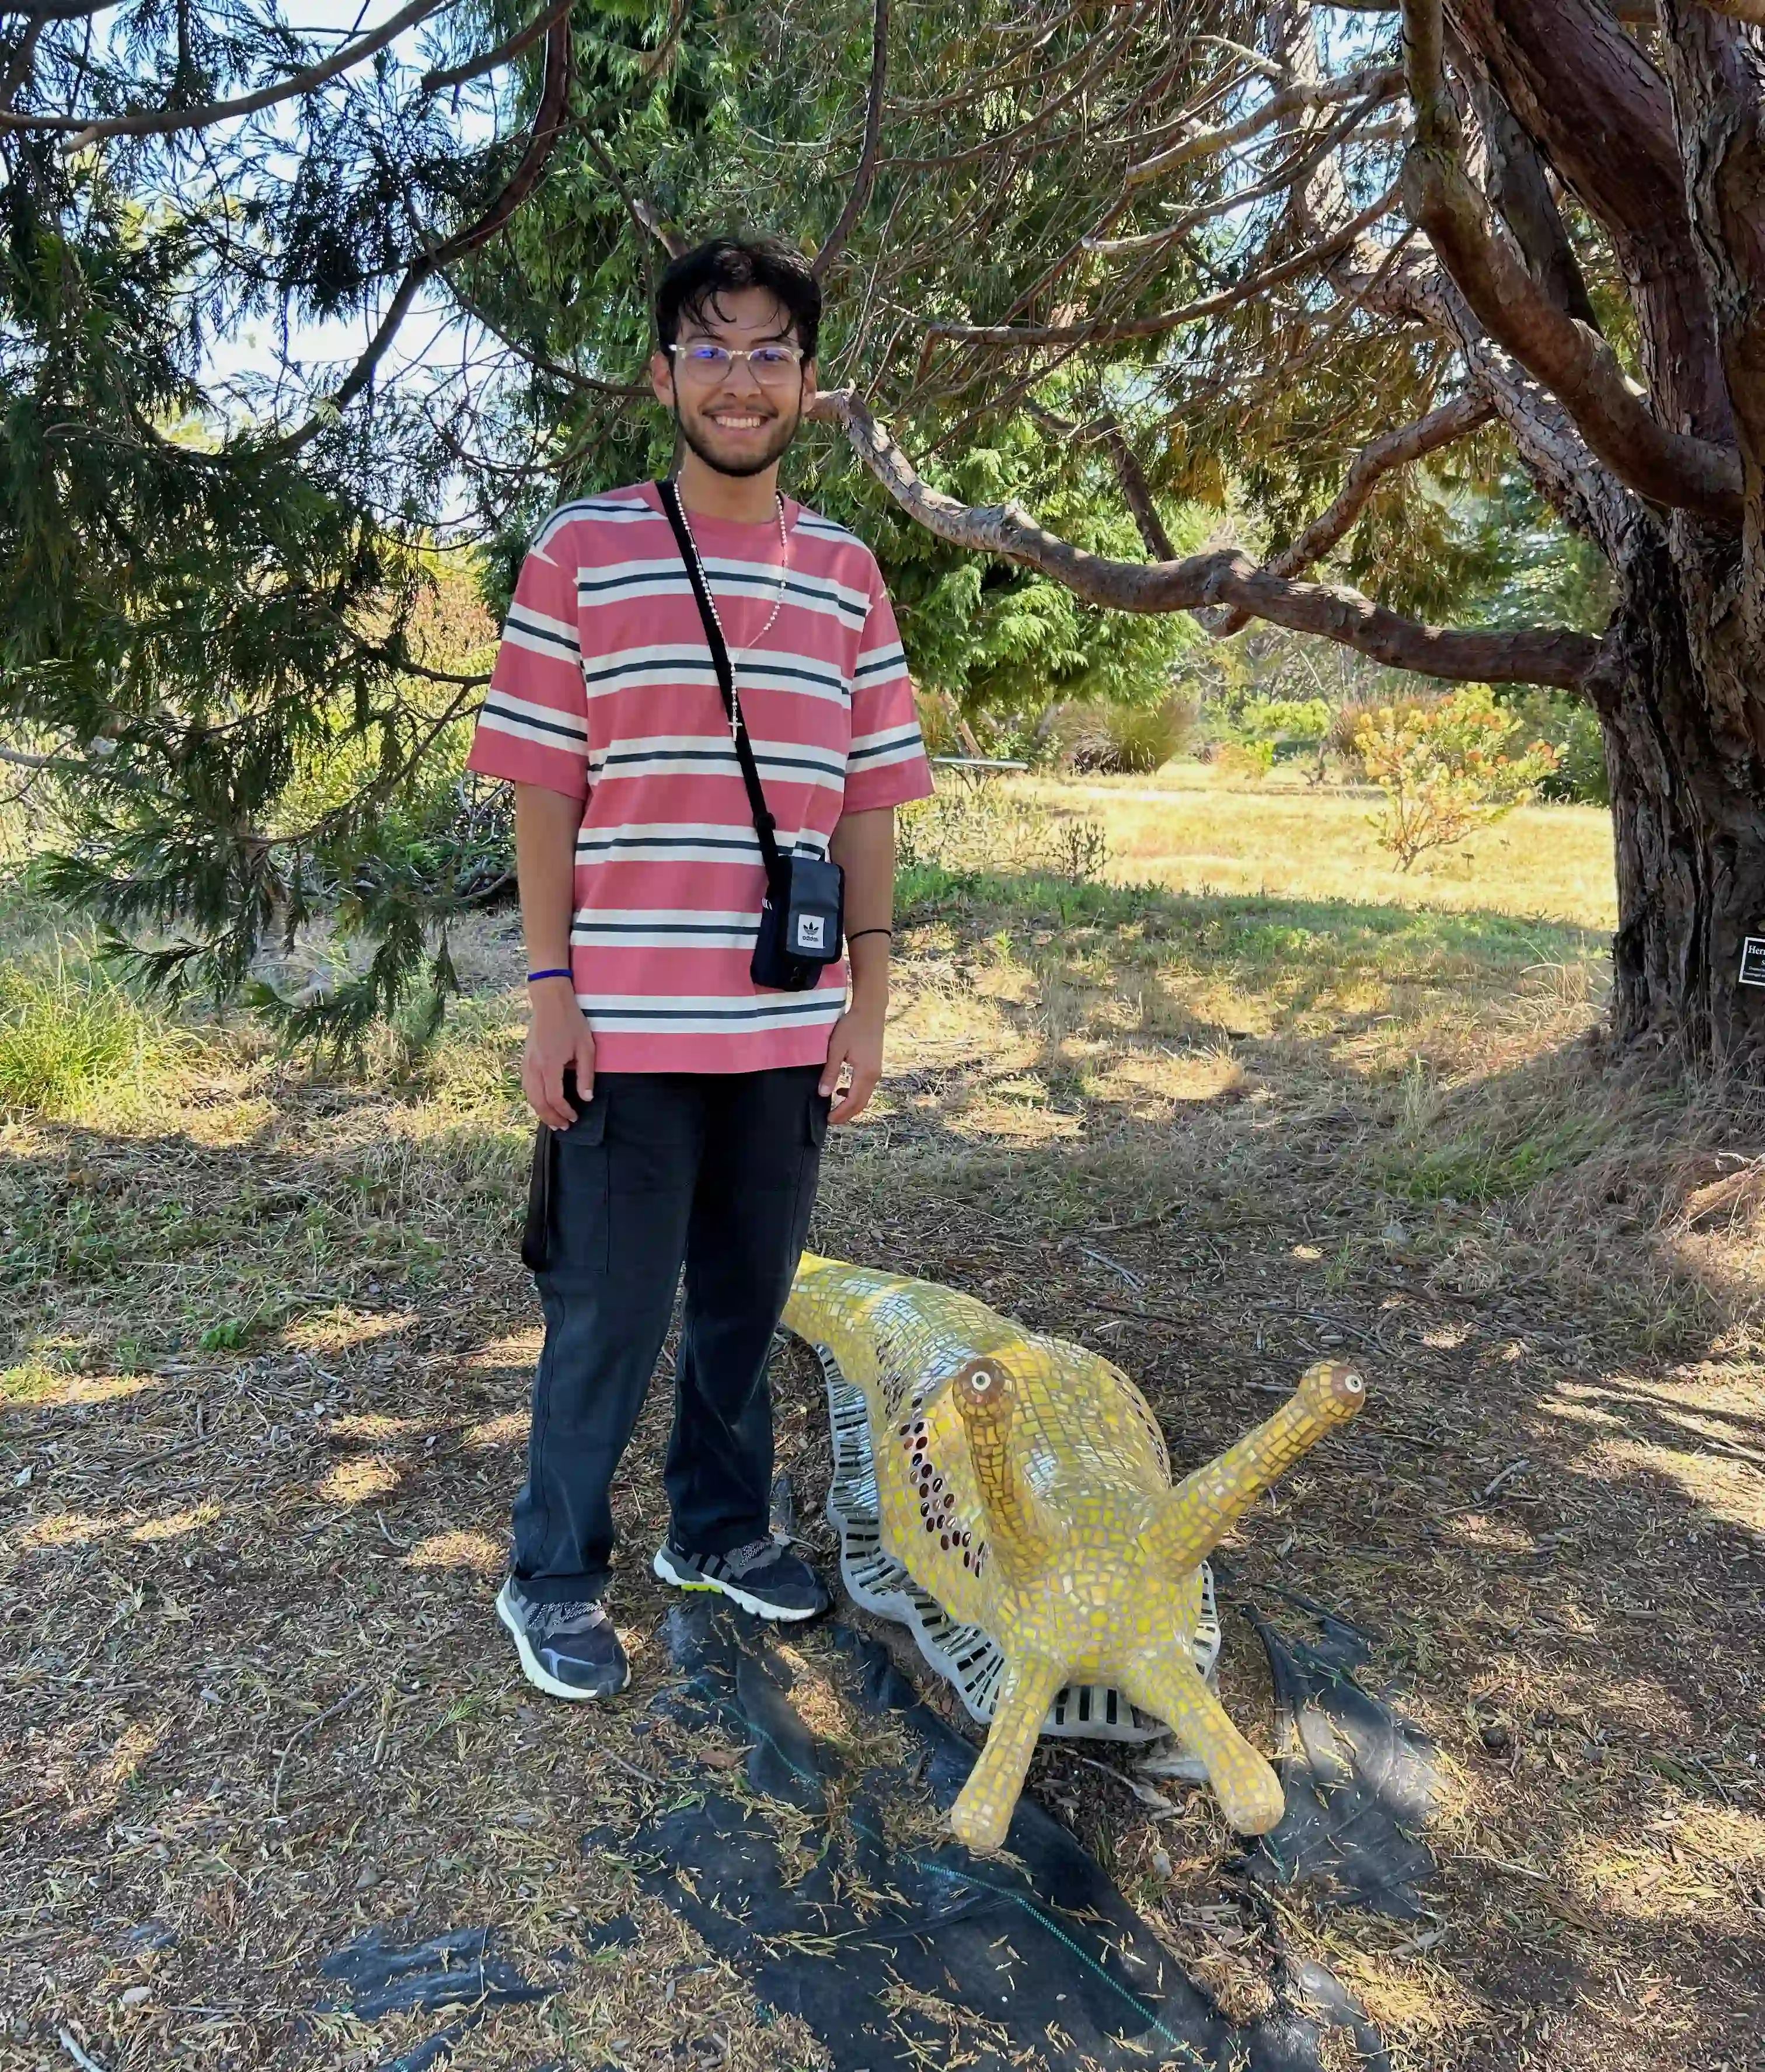 Eric posing with a banana slug statue at the UC Santa Cruz Arboretum